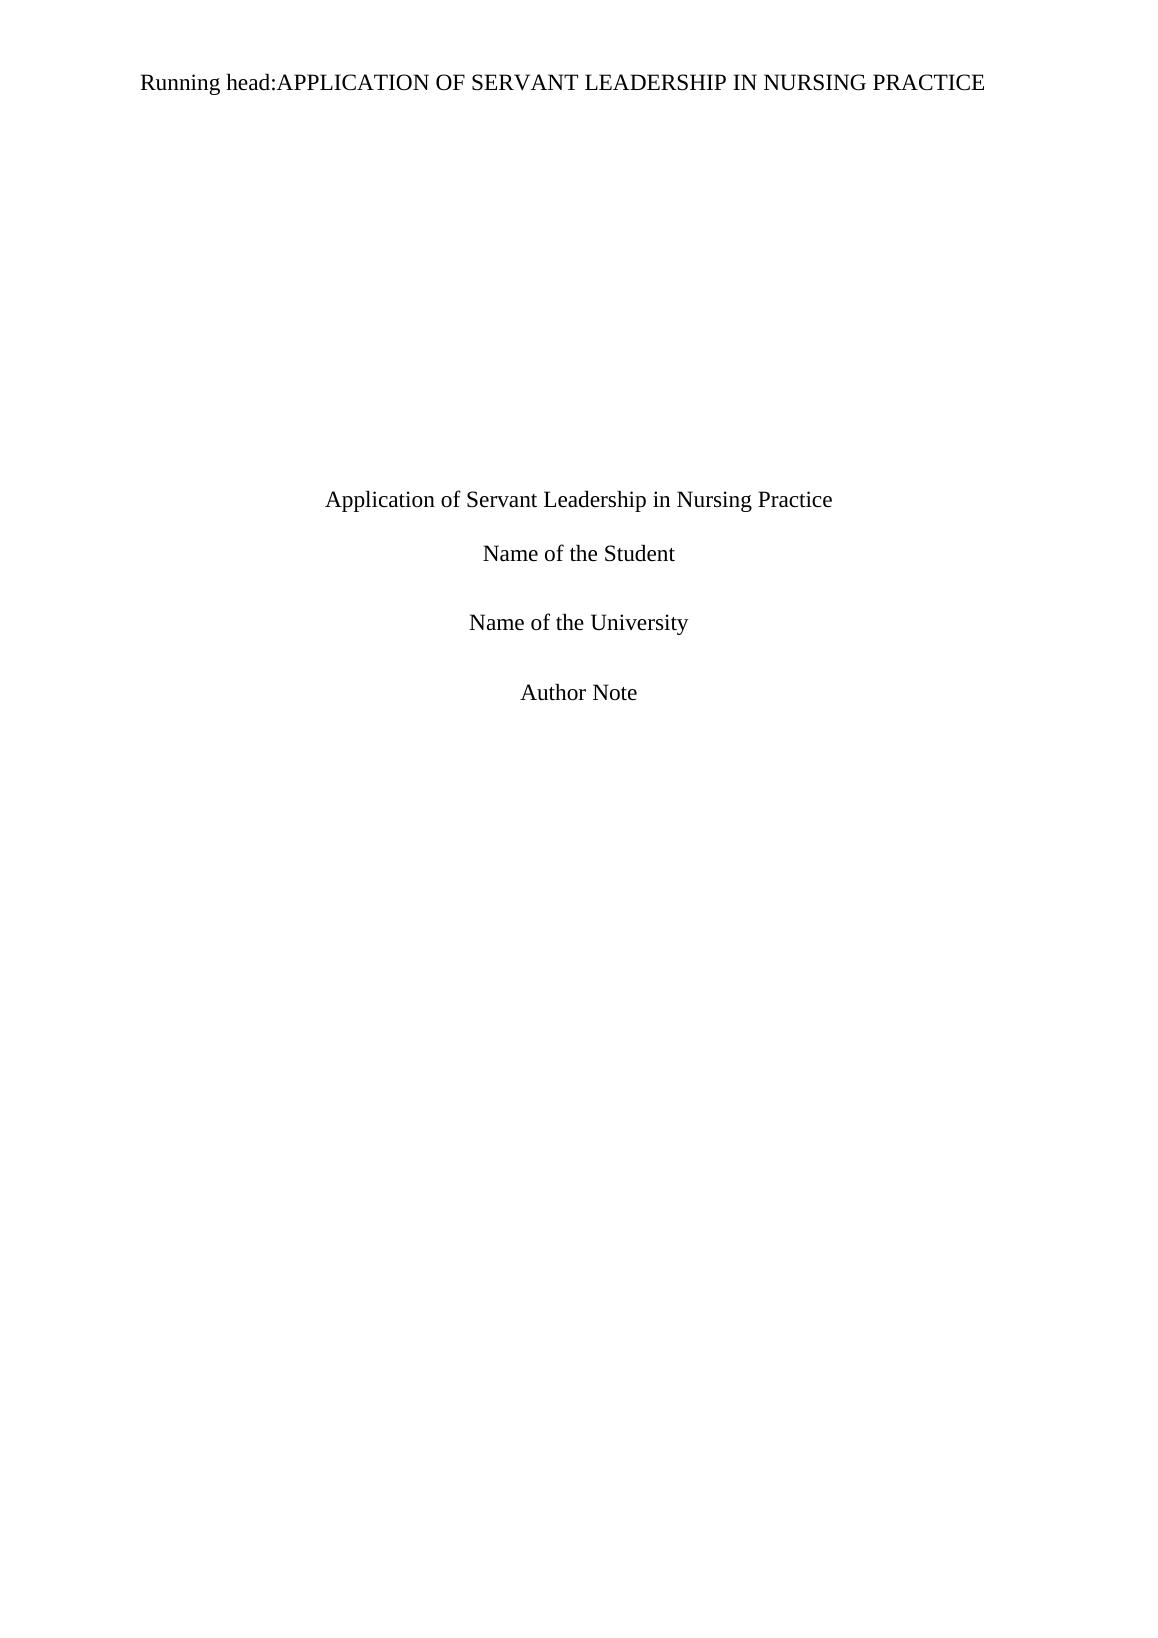 Application of Servant Leadership in Nursing Practice_1